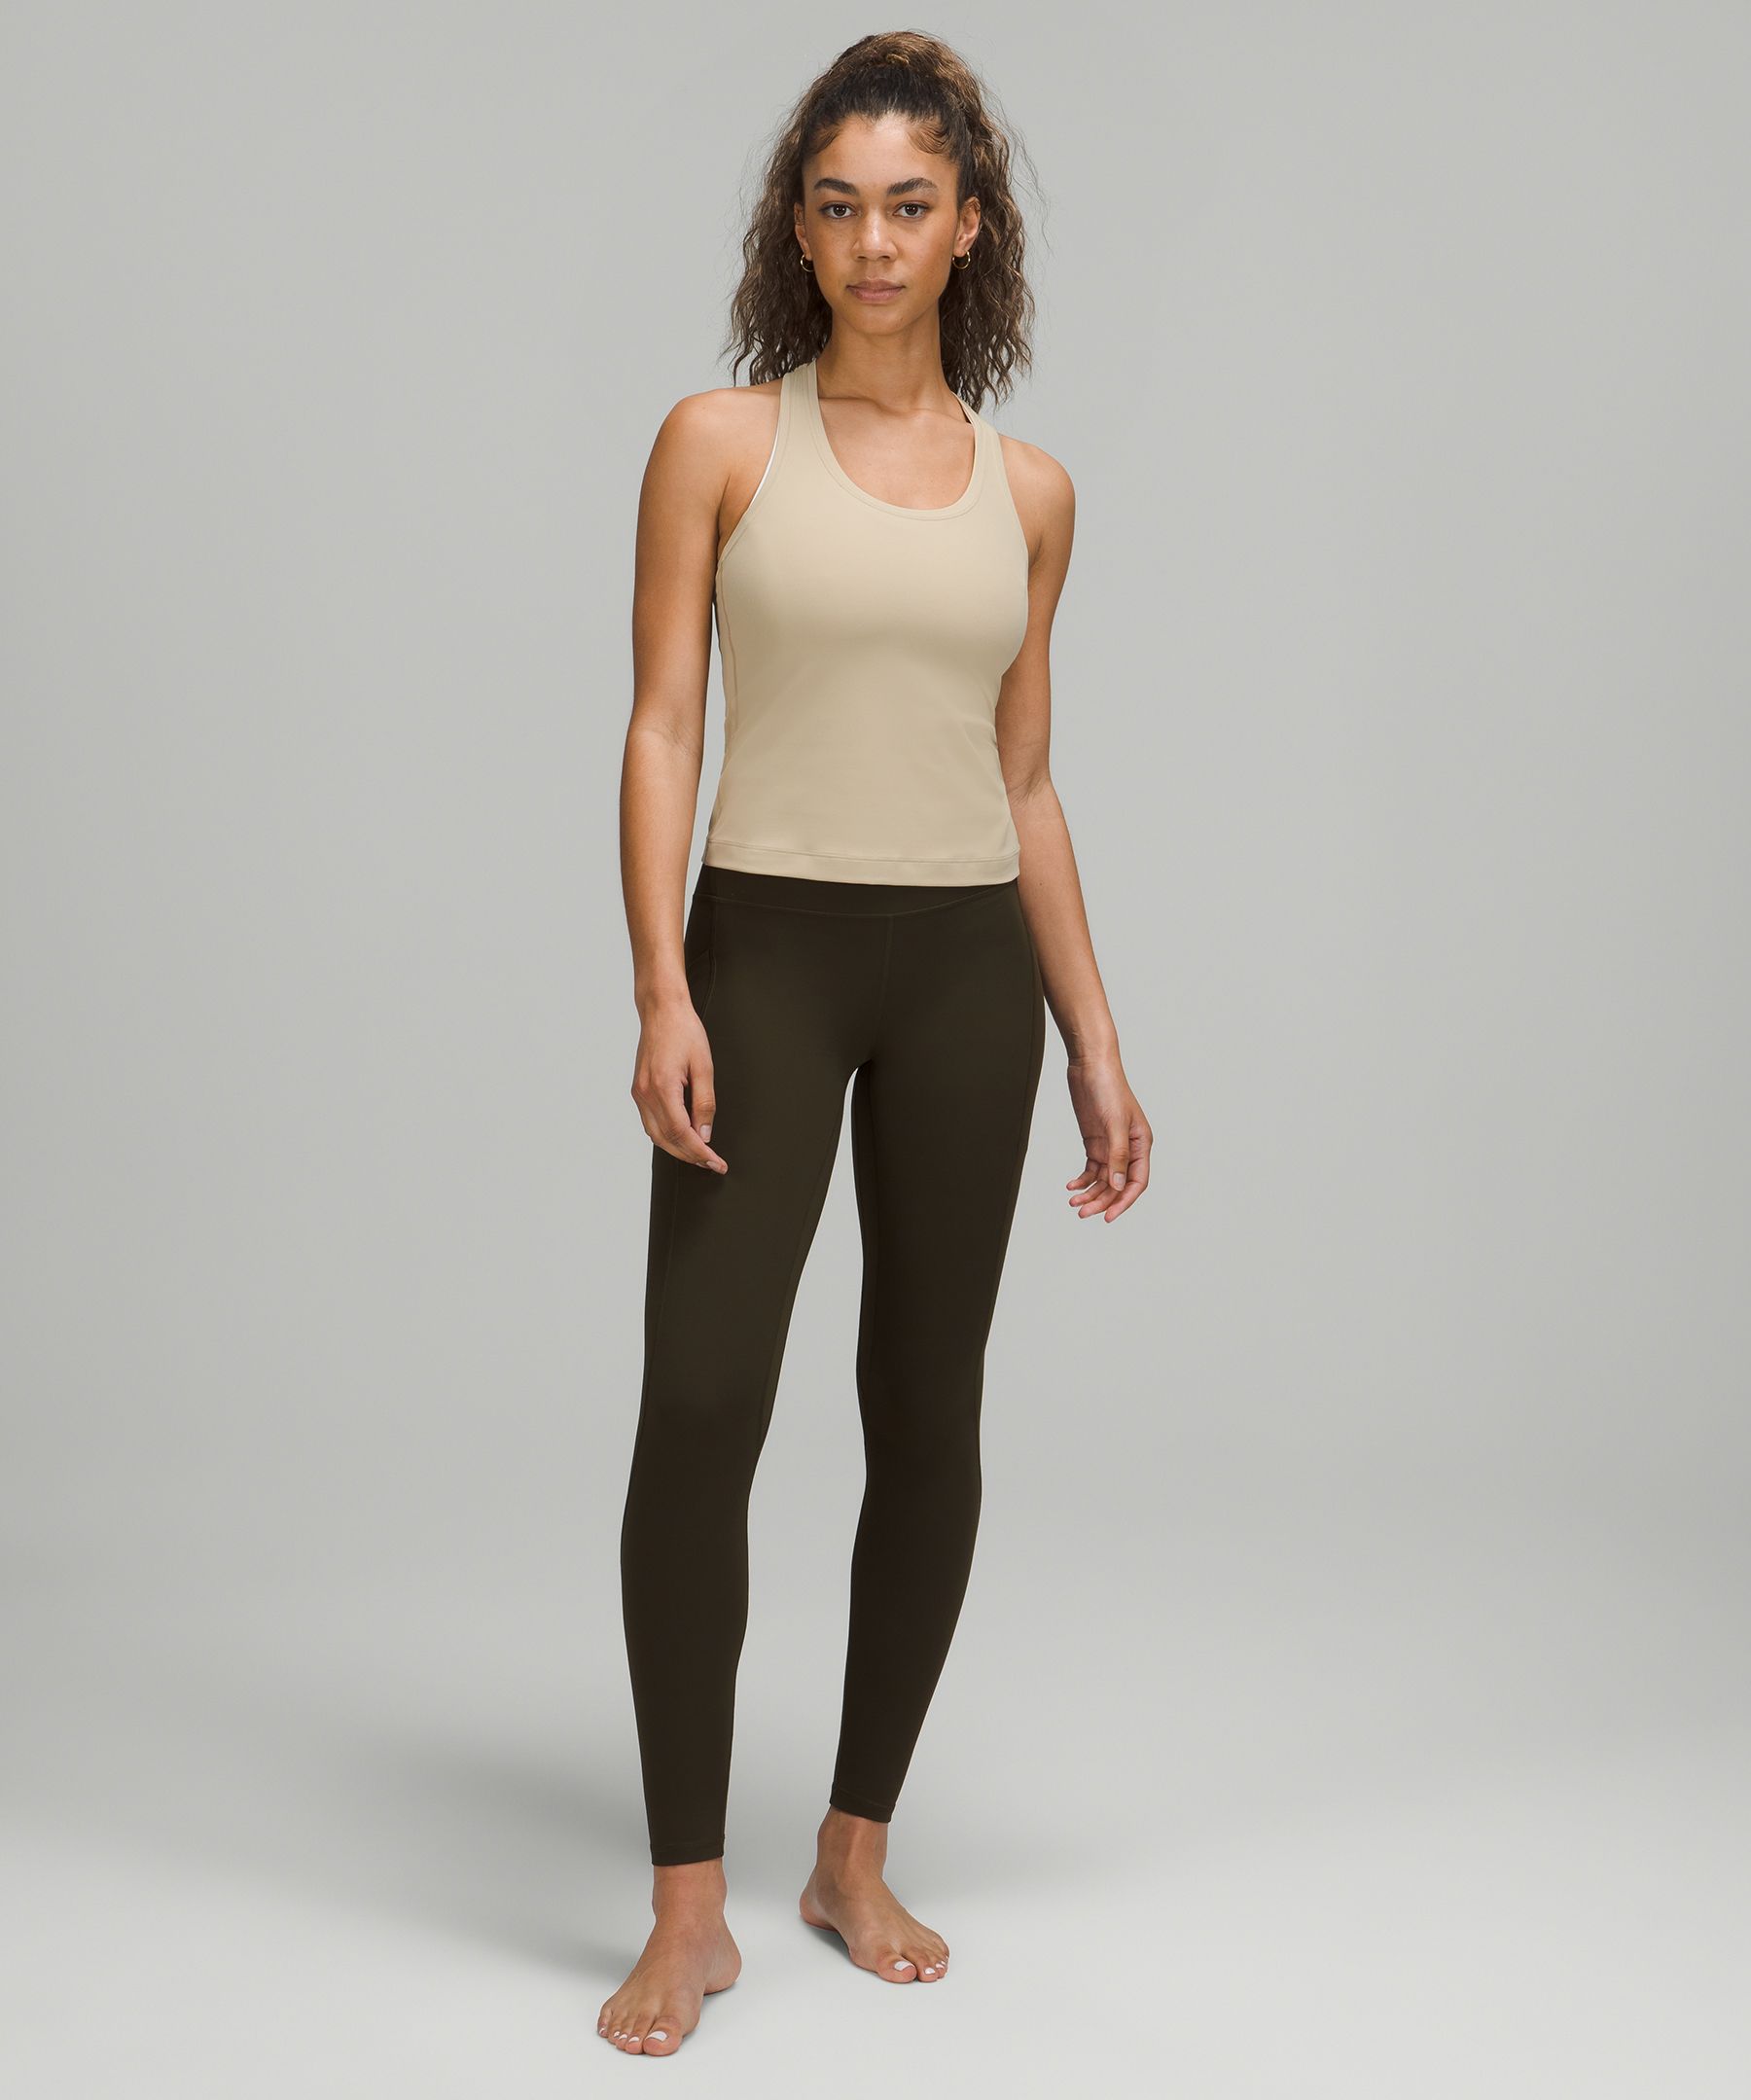 Lululemon Women Sweatpants Leisure Joggers Pants with Pockets Athletic Yoga  Lounge Workout Running Pants 8802